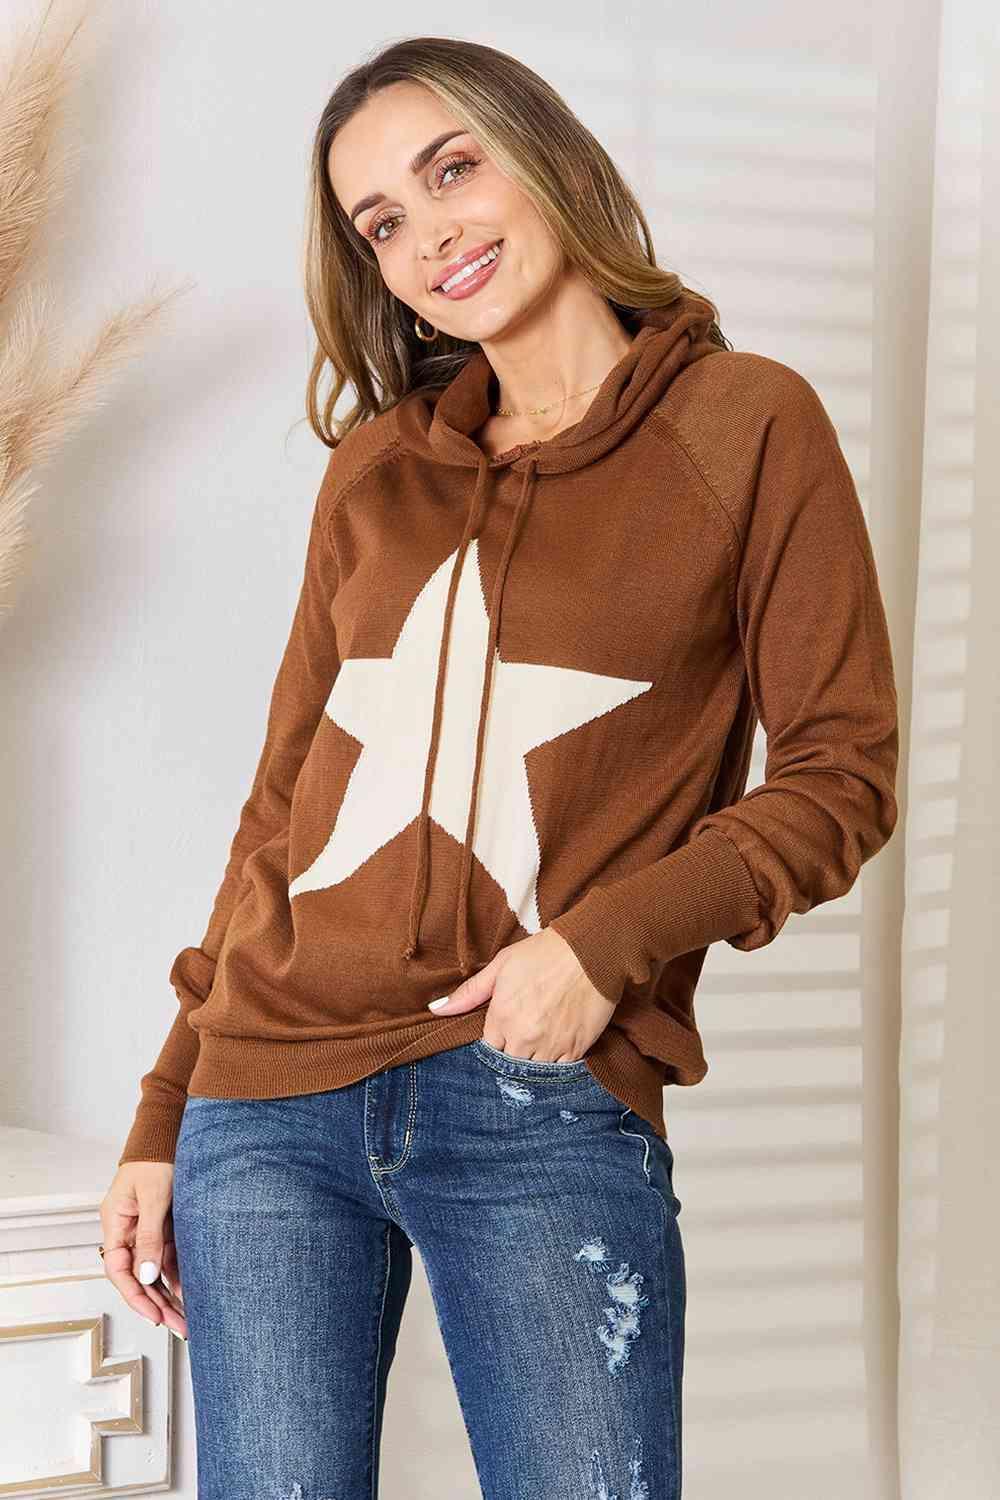 Bona Fide Fashion - Full Size Star Graphic Hooded Sweater - Women Fashion - Bona Fide Fashion